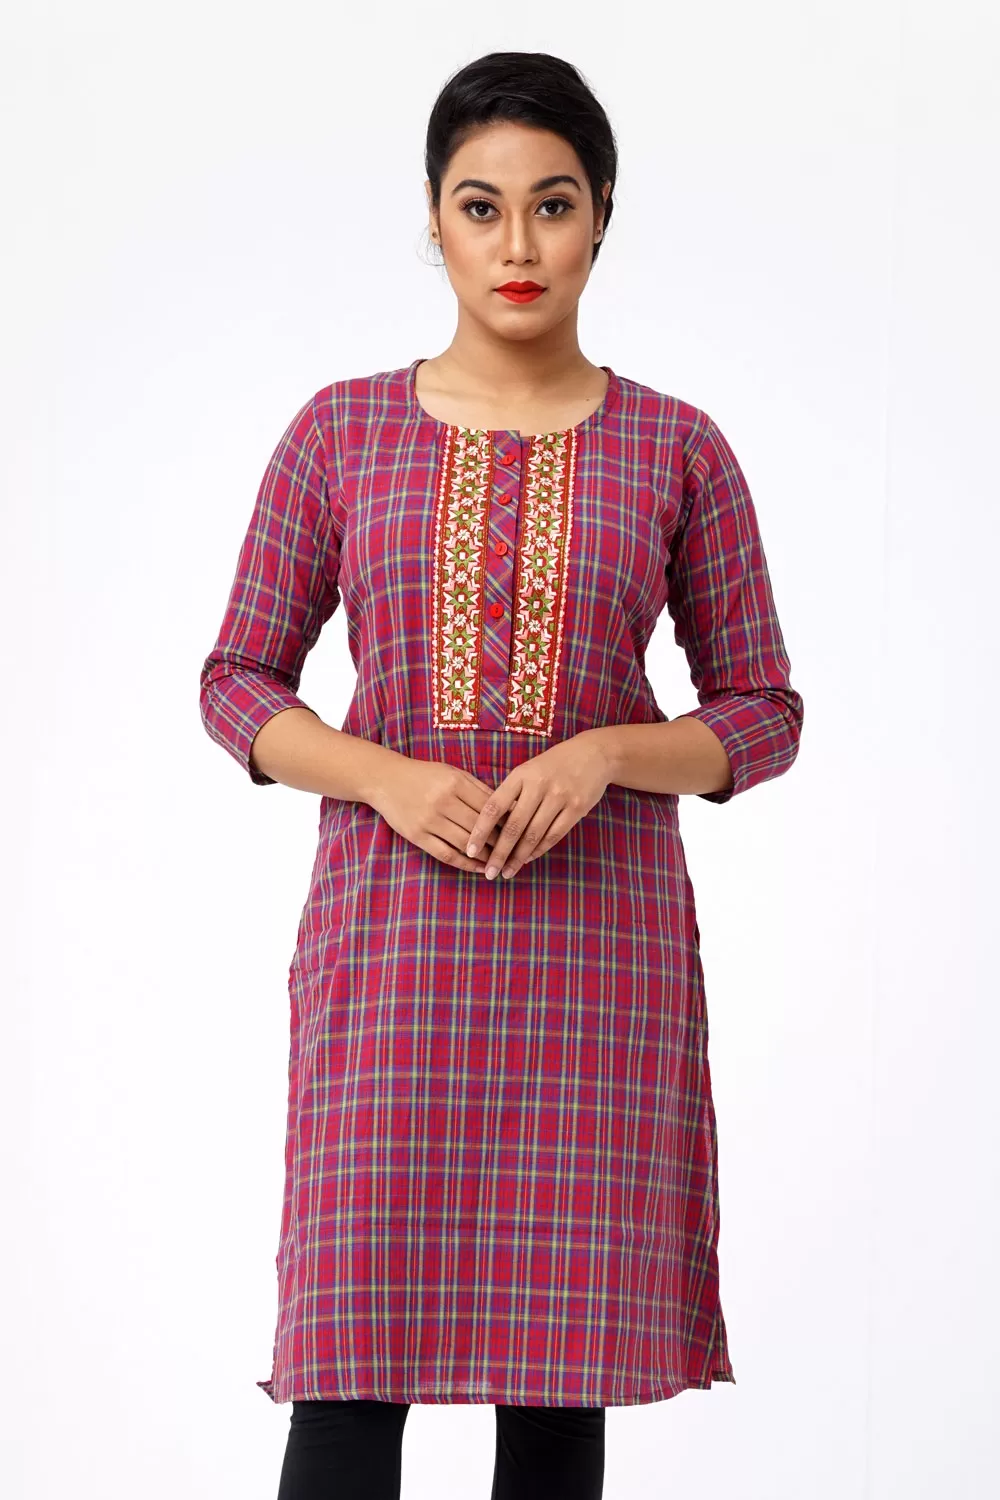 Printed Kurti Designs Check Printing Kurti Design #checkprint #kurti  #latest #Cotton #women #Indian | Casual shirt women, Ladies tops fashion,  Women shirt top